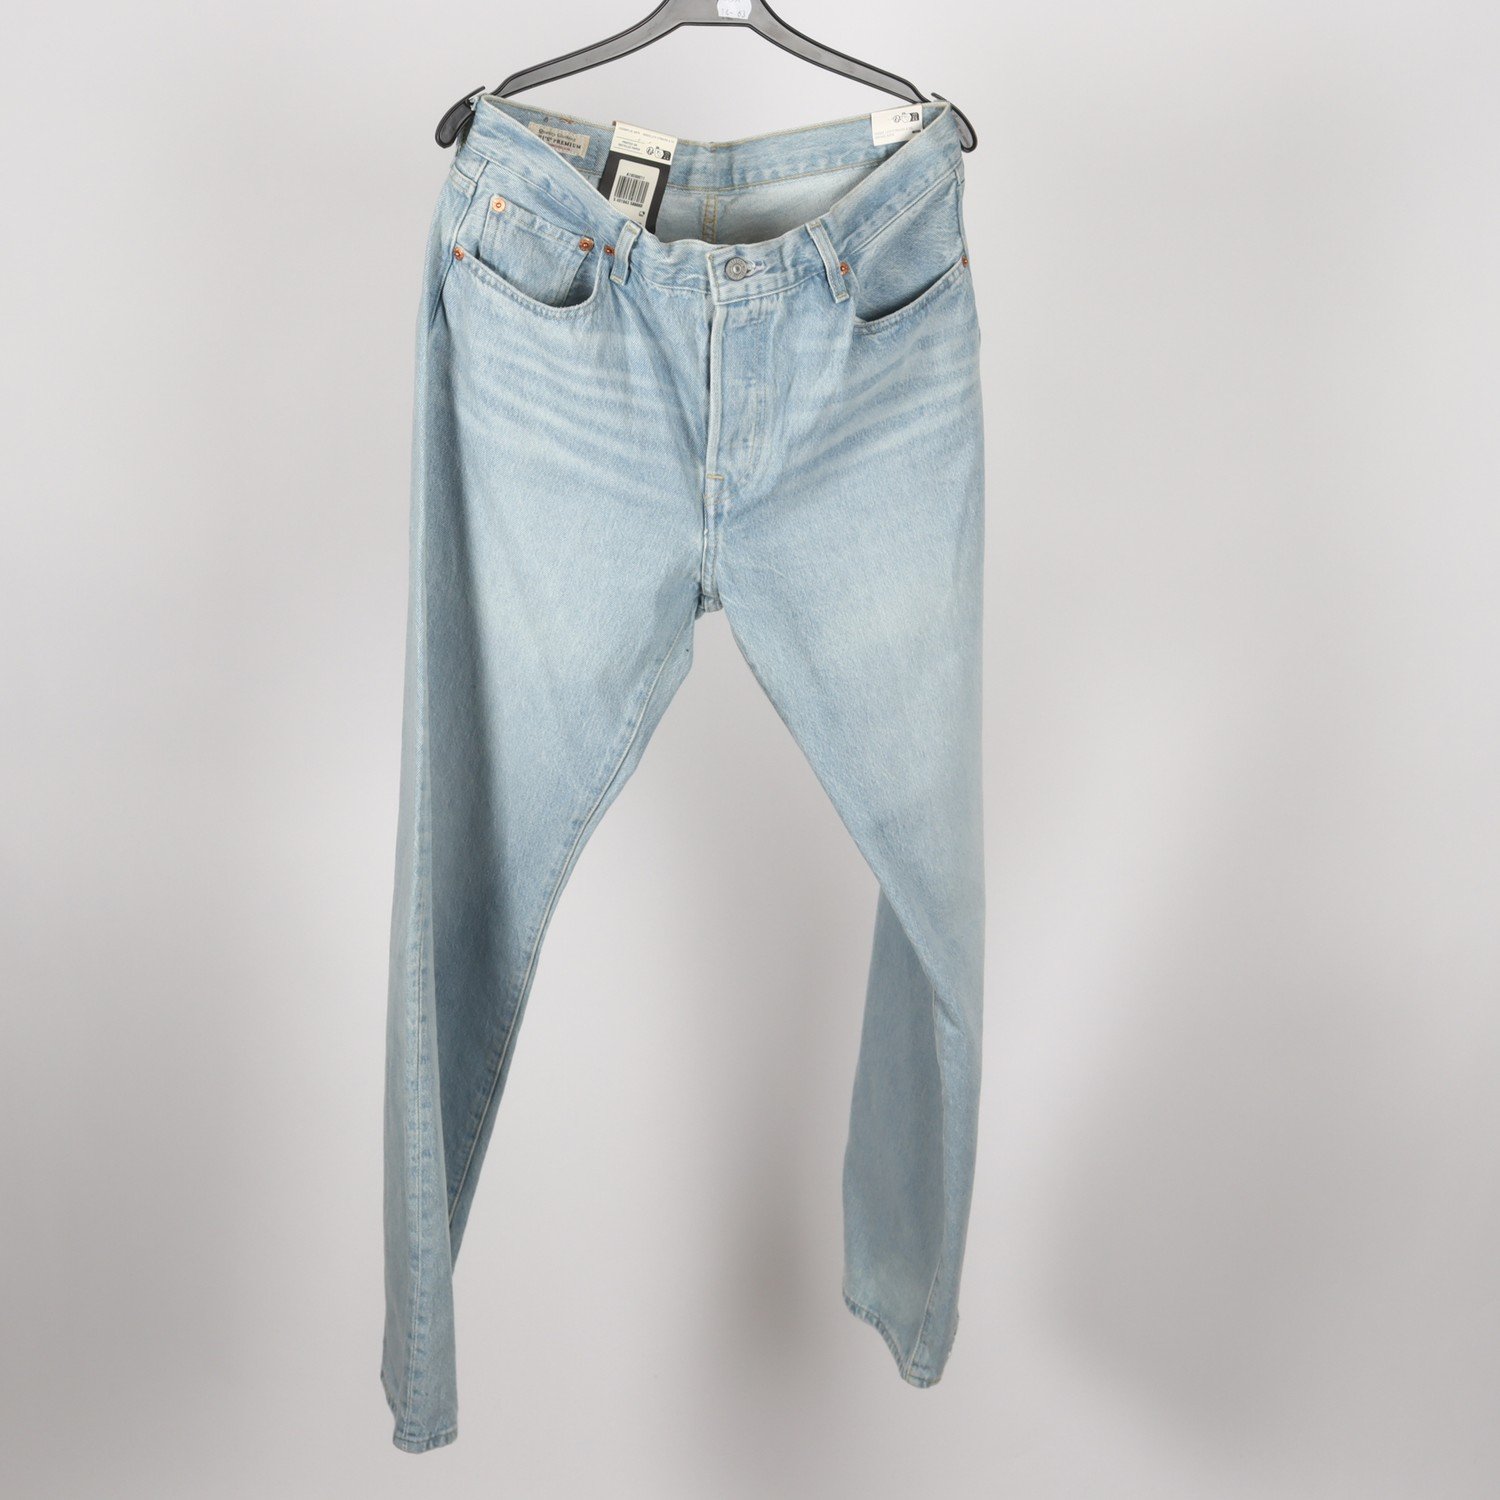 Jeans, Levi’s 501 ’90s, stl. 29/32